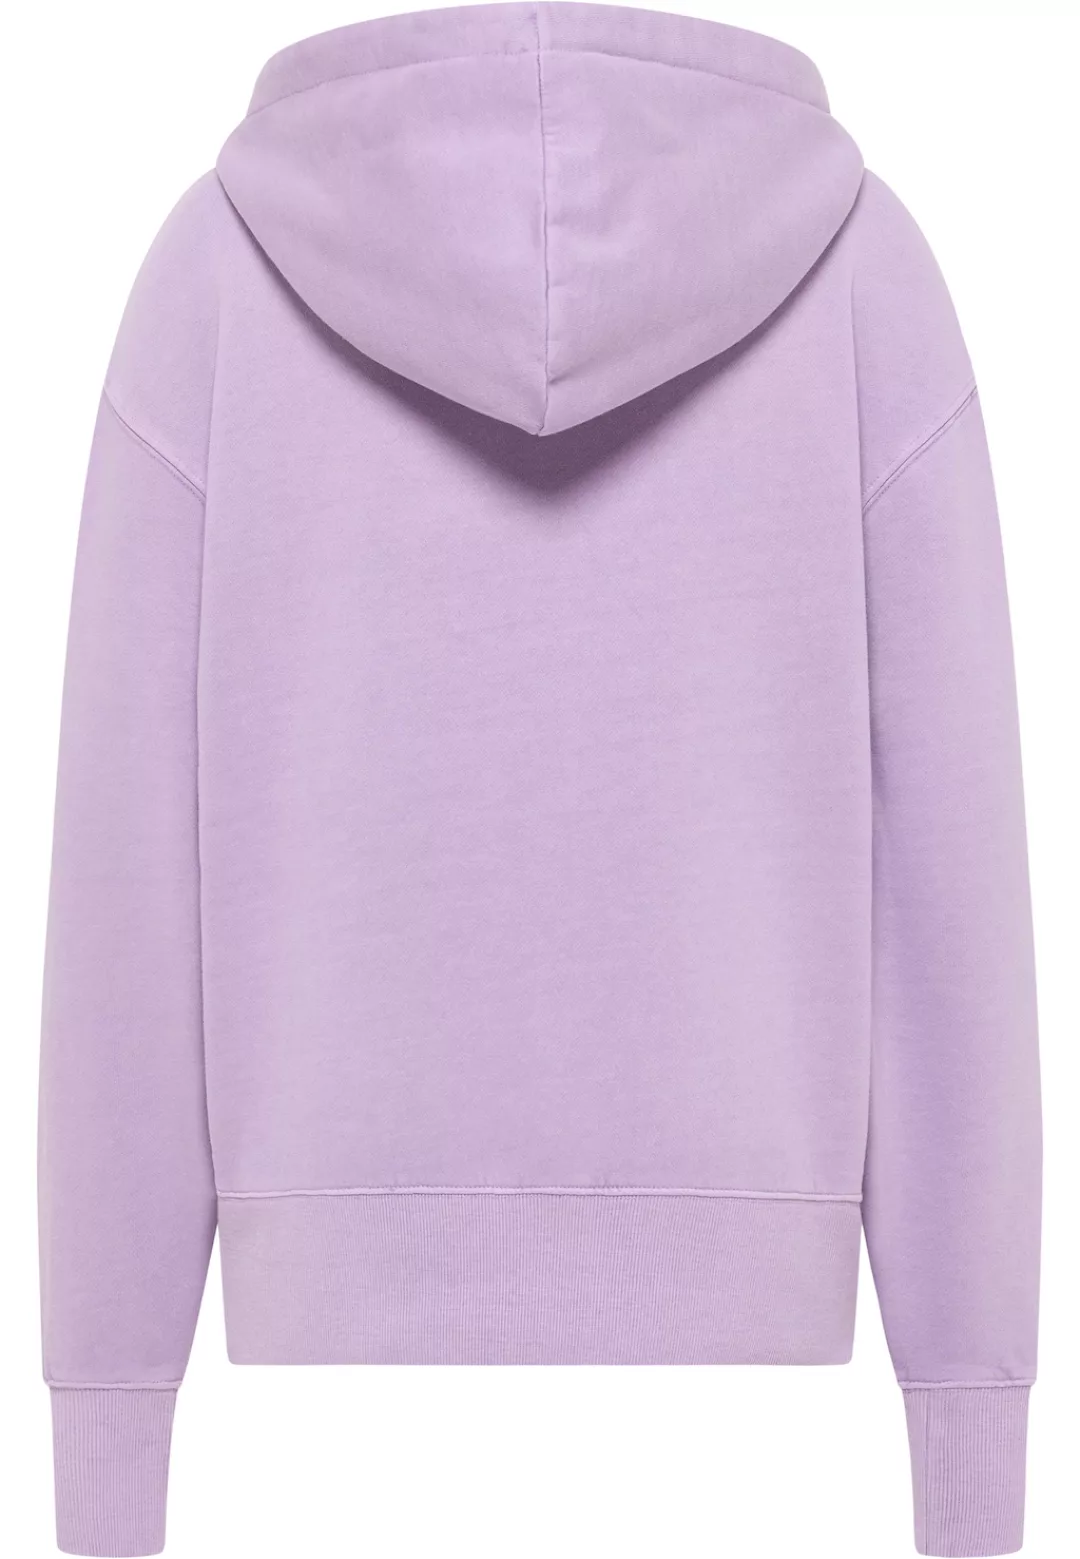 MUSTANG Sweatshirt "Sweatshirt" günstig online kaufen